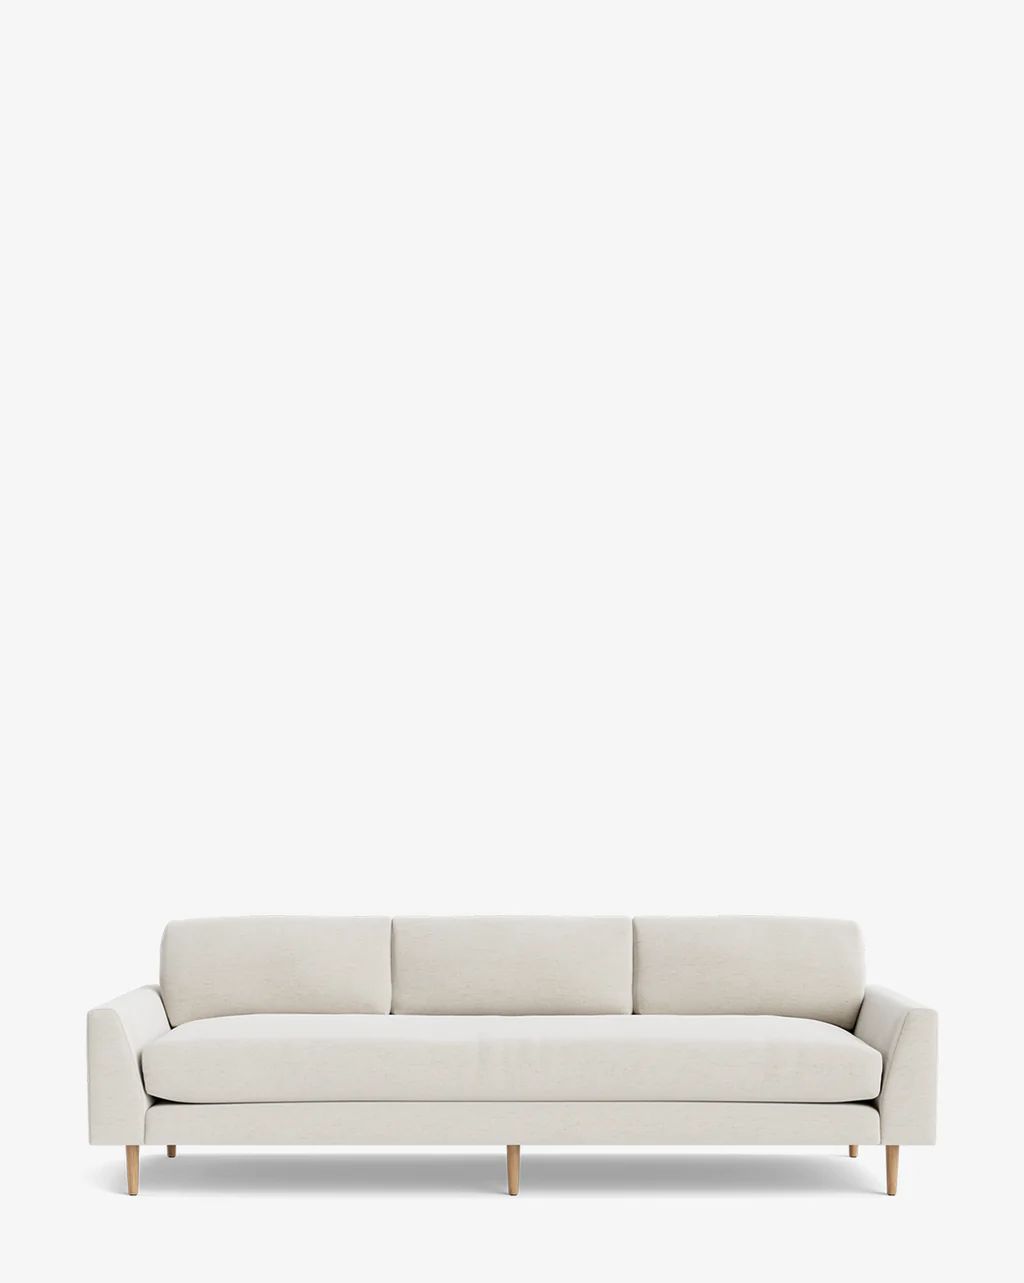 Hale Sofa | McGee & Co.